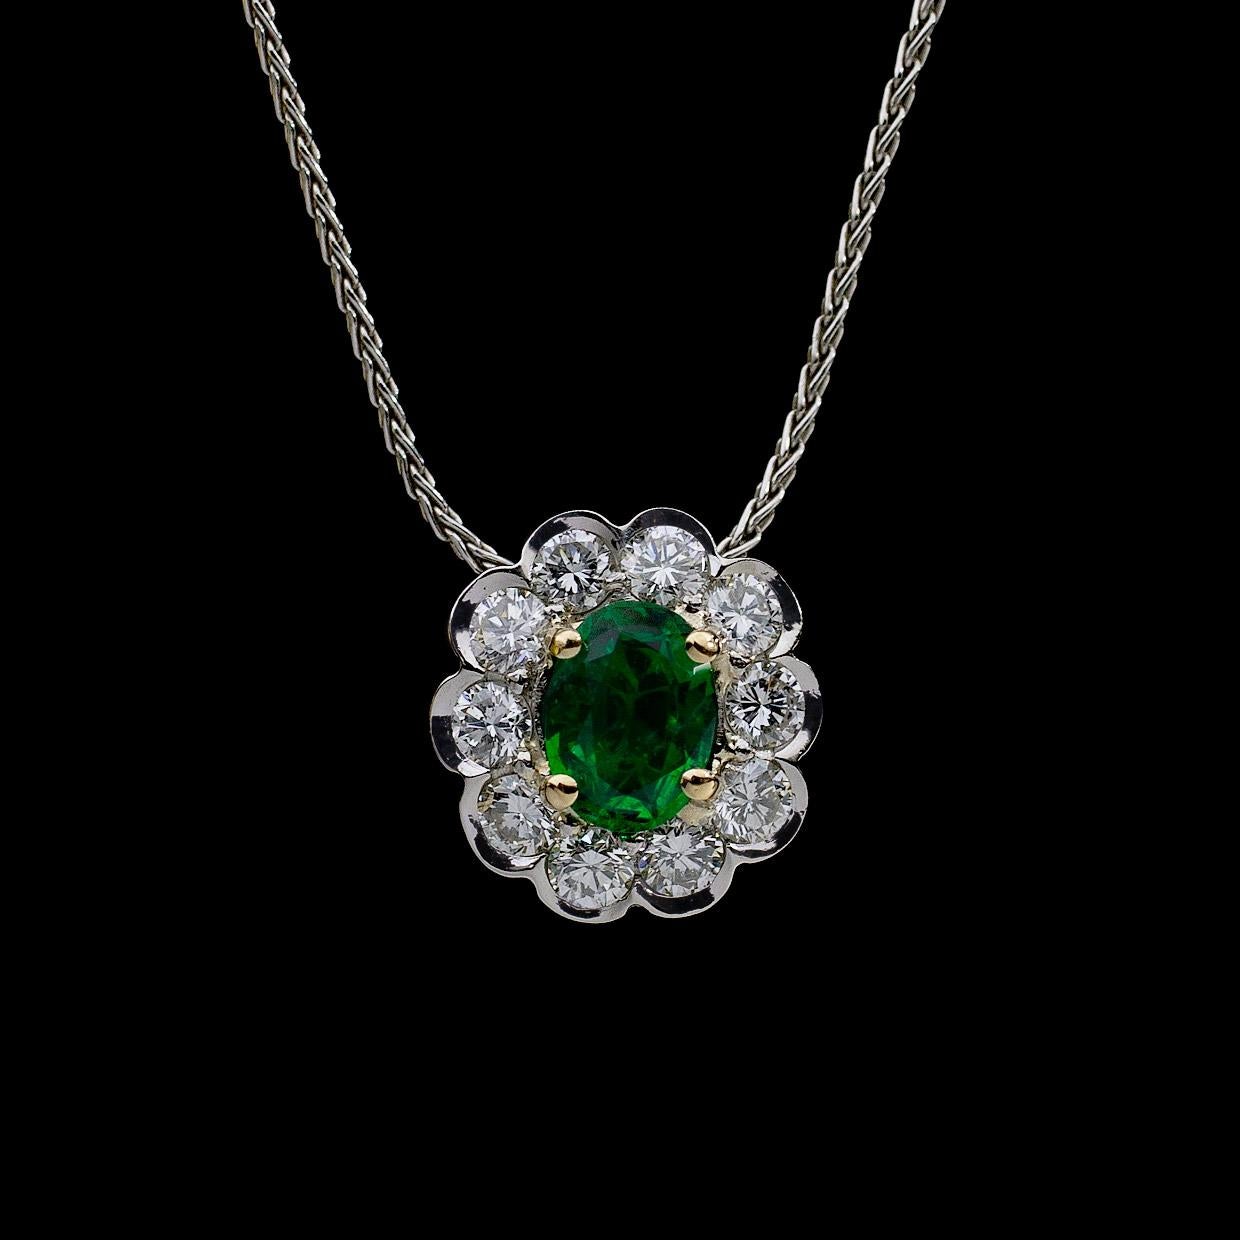 Women's Platinum/18kyg 1.95 Carat Oval Cut Emerald and Diamond Pendant Necklace